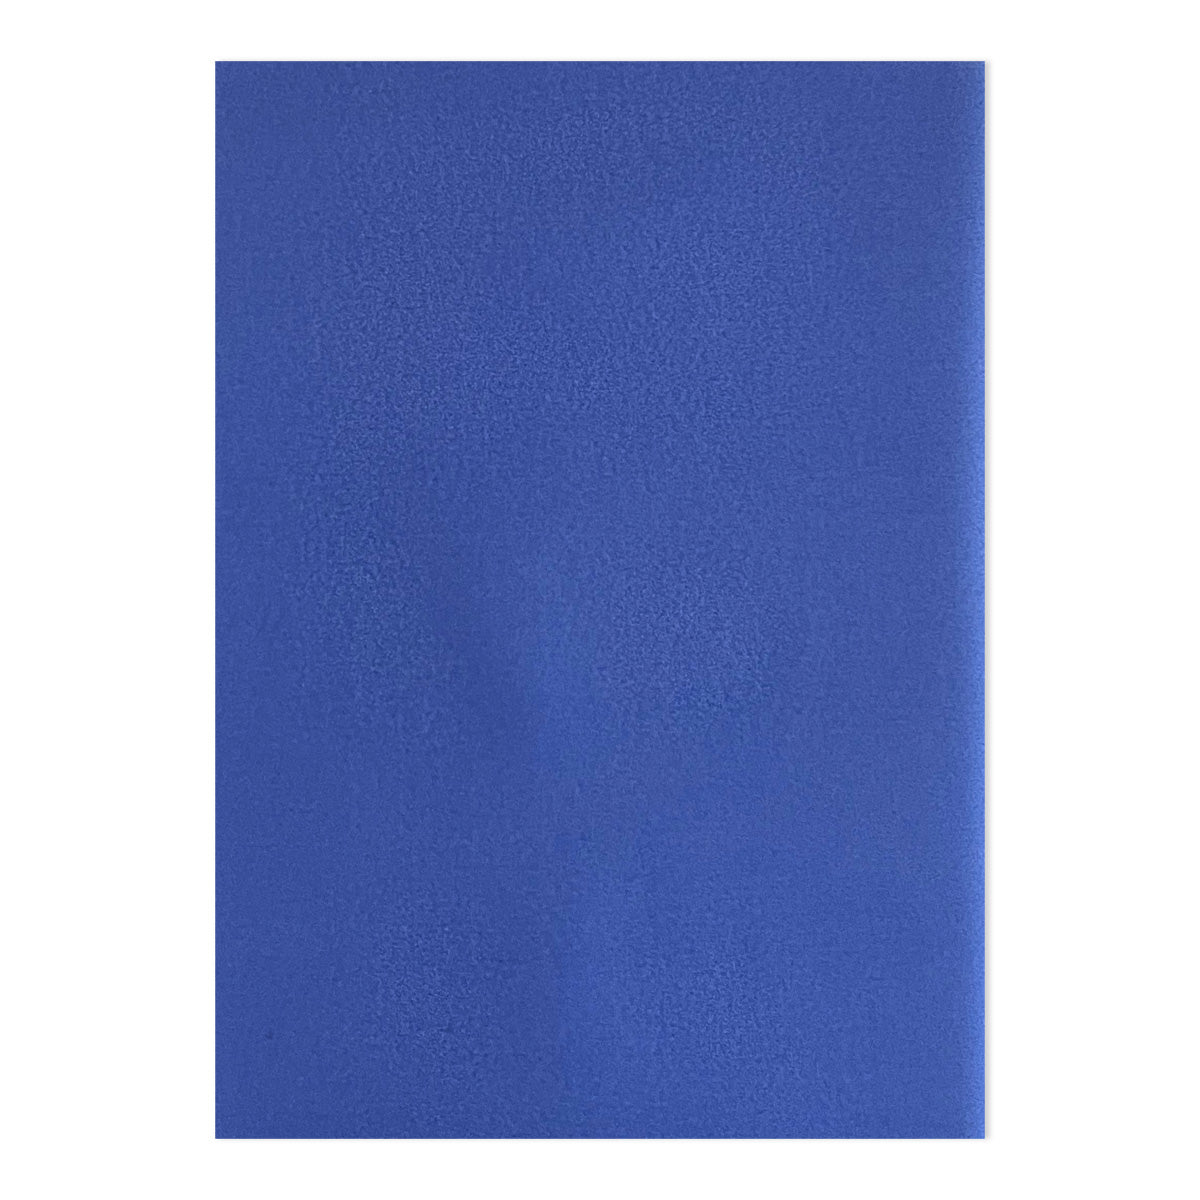 DEEP BLUE Translucent Vellum - 8½ x 11 - Encore